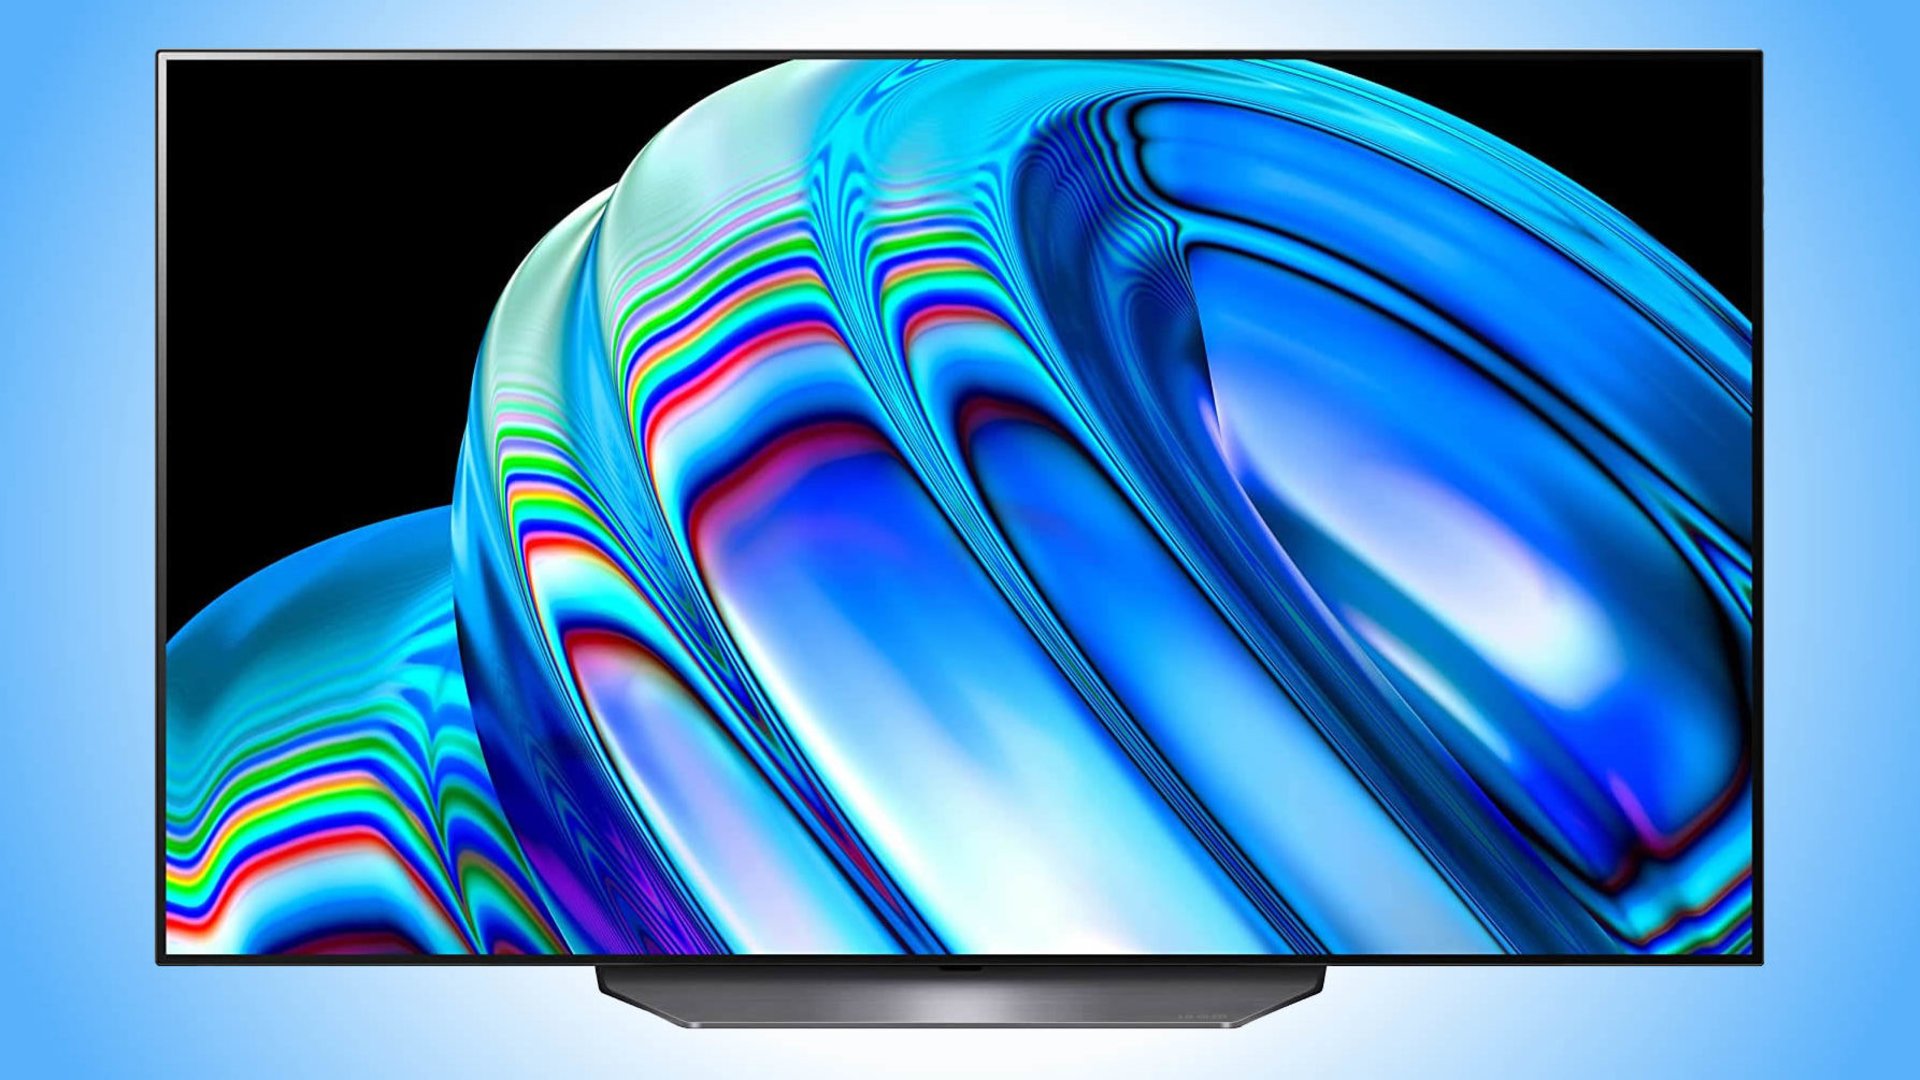 #Amazon verkauft LG-OLED-TV mit 55 Zoll zum Sonderpreis